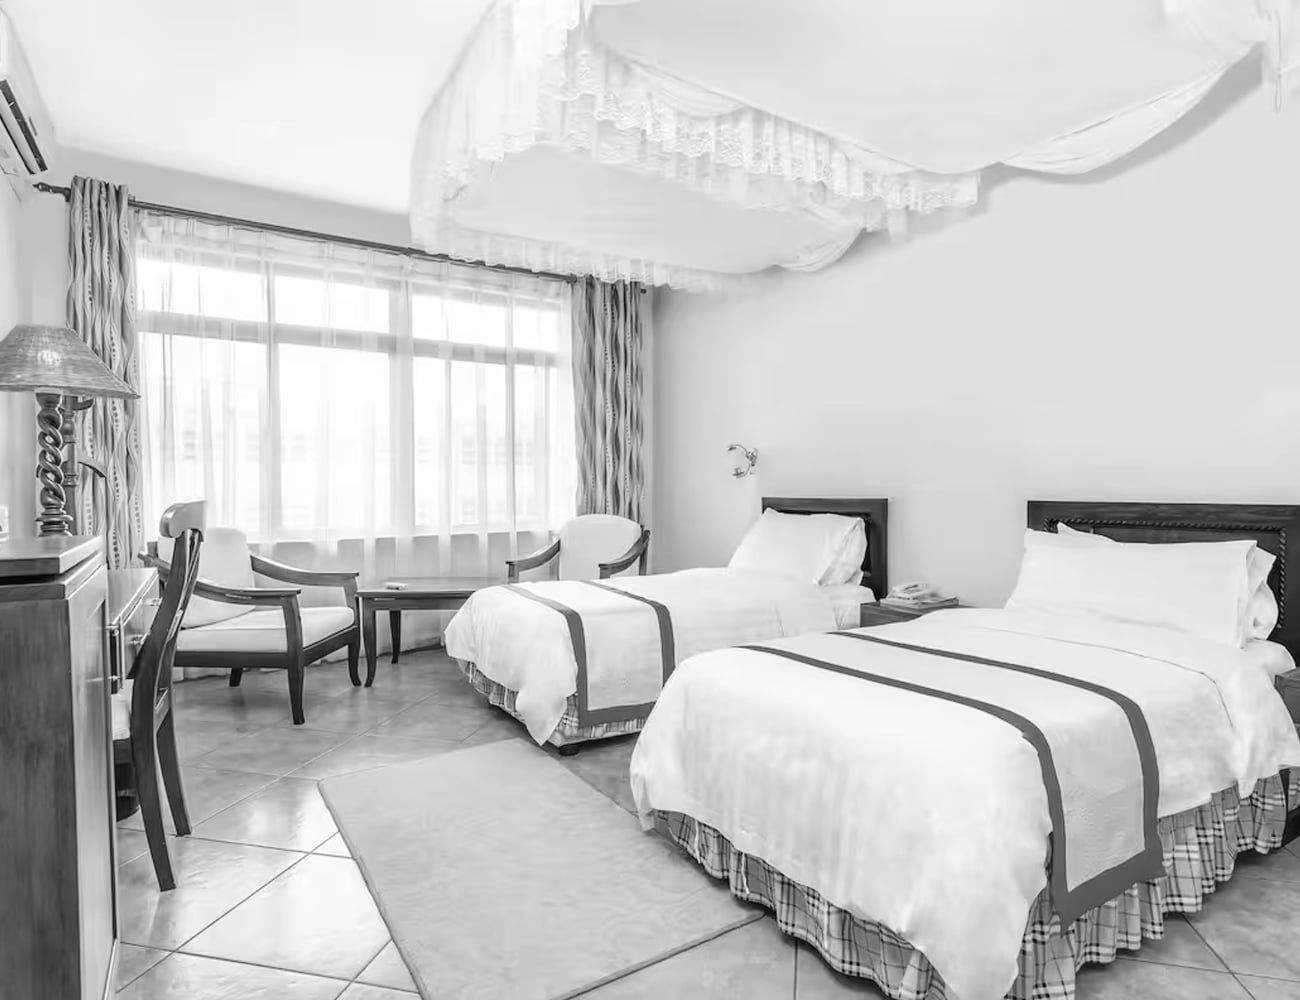 Bedrooms at New Safari Hotel, Arusha